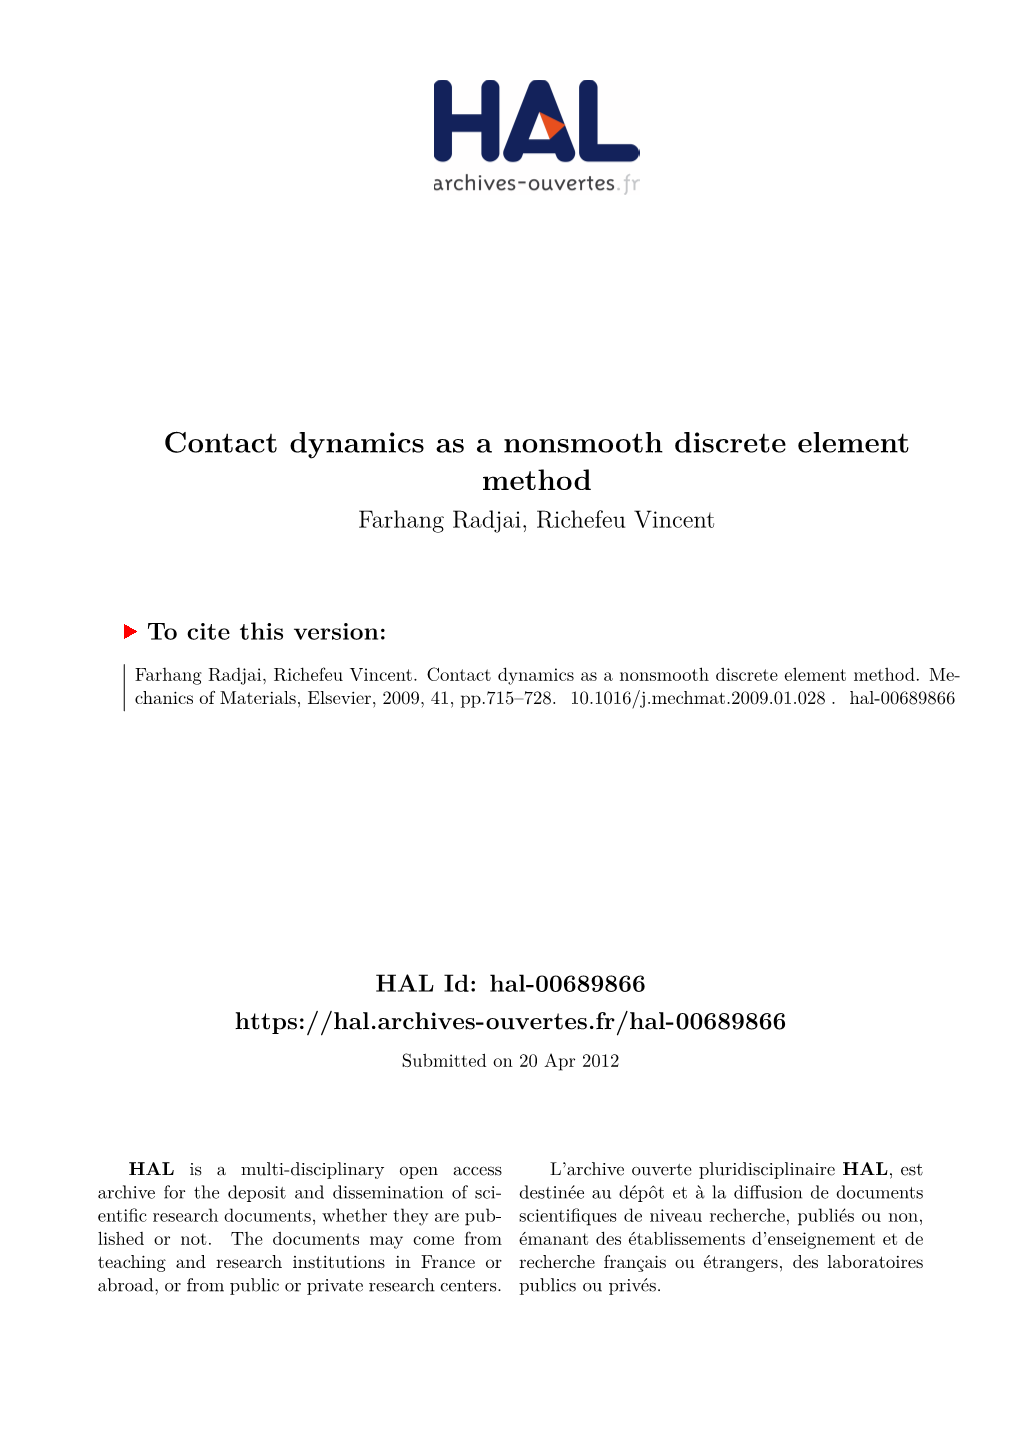 Contact Dynamics As a Nonsmooth Discrete Element Method Farhang Radjai, Richefeu Vincent